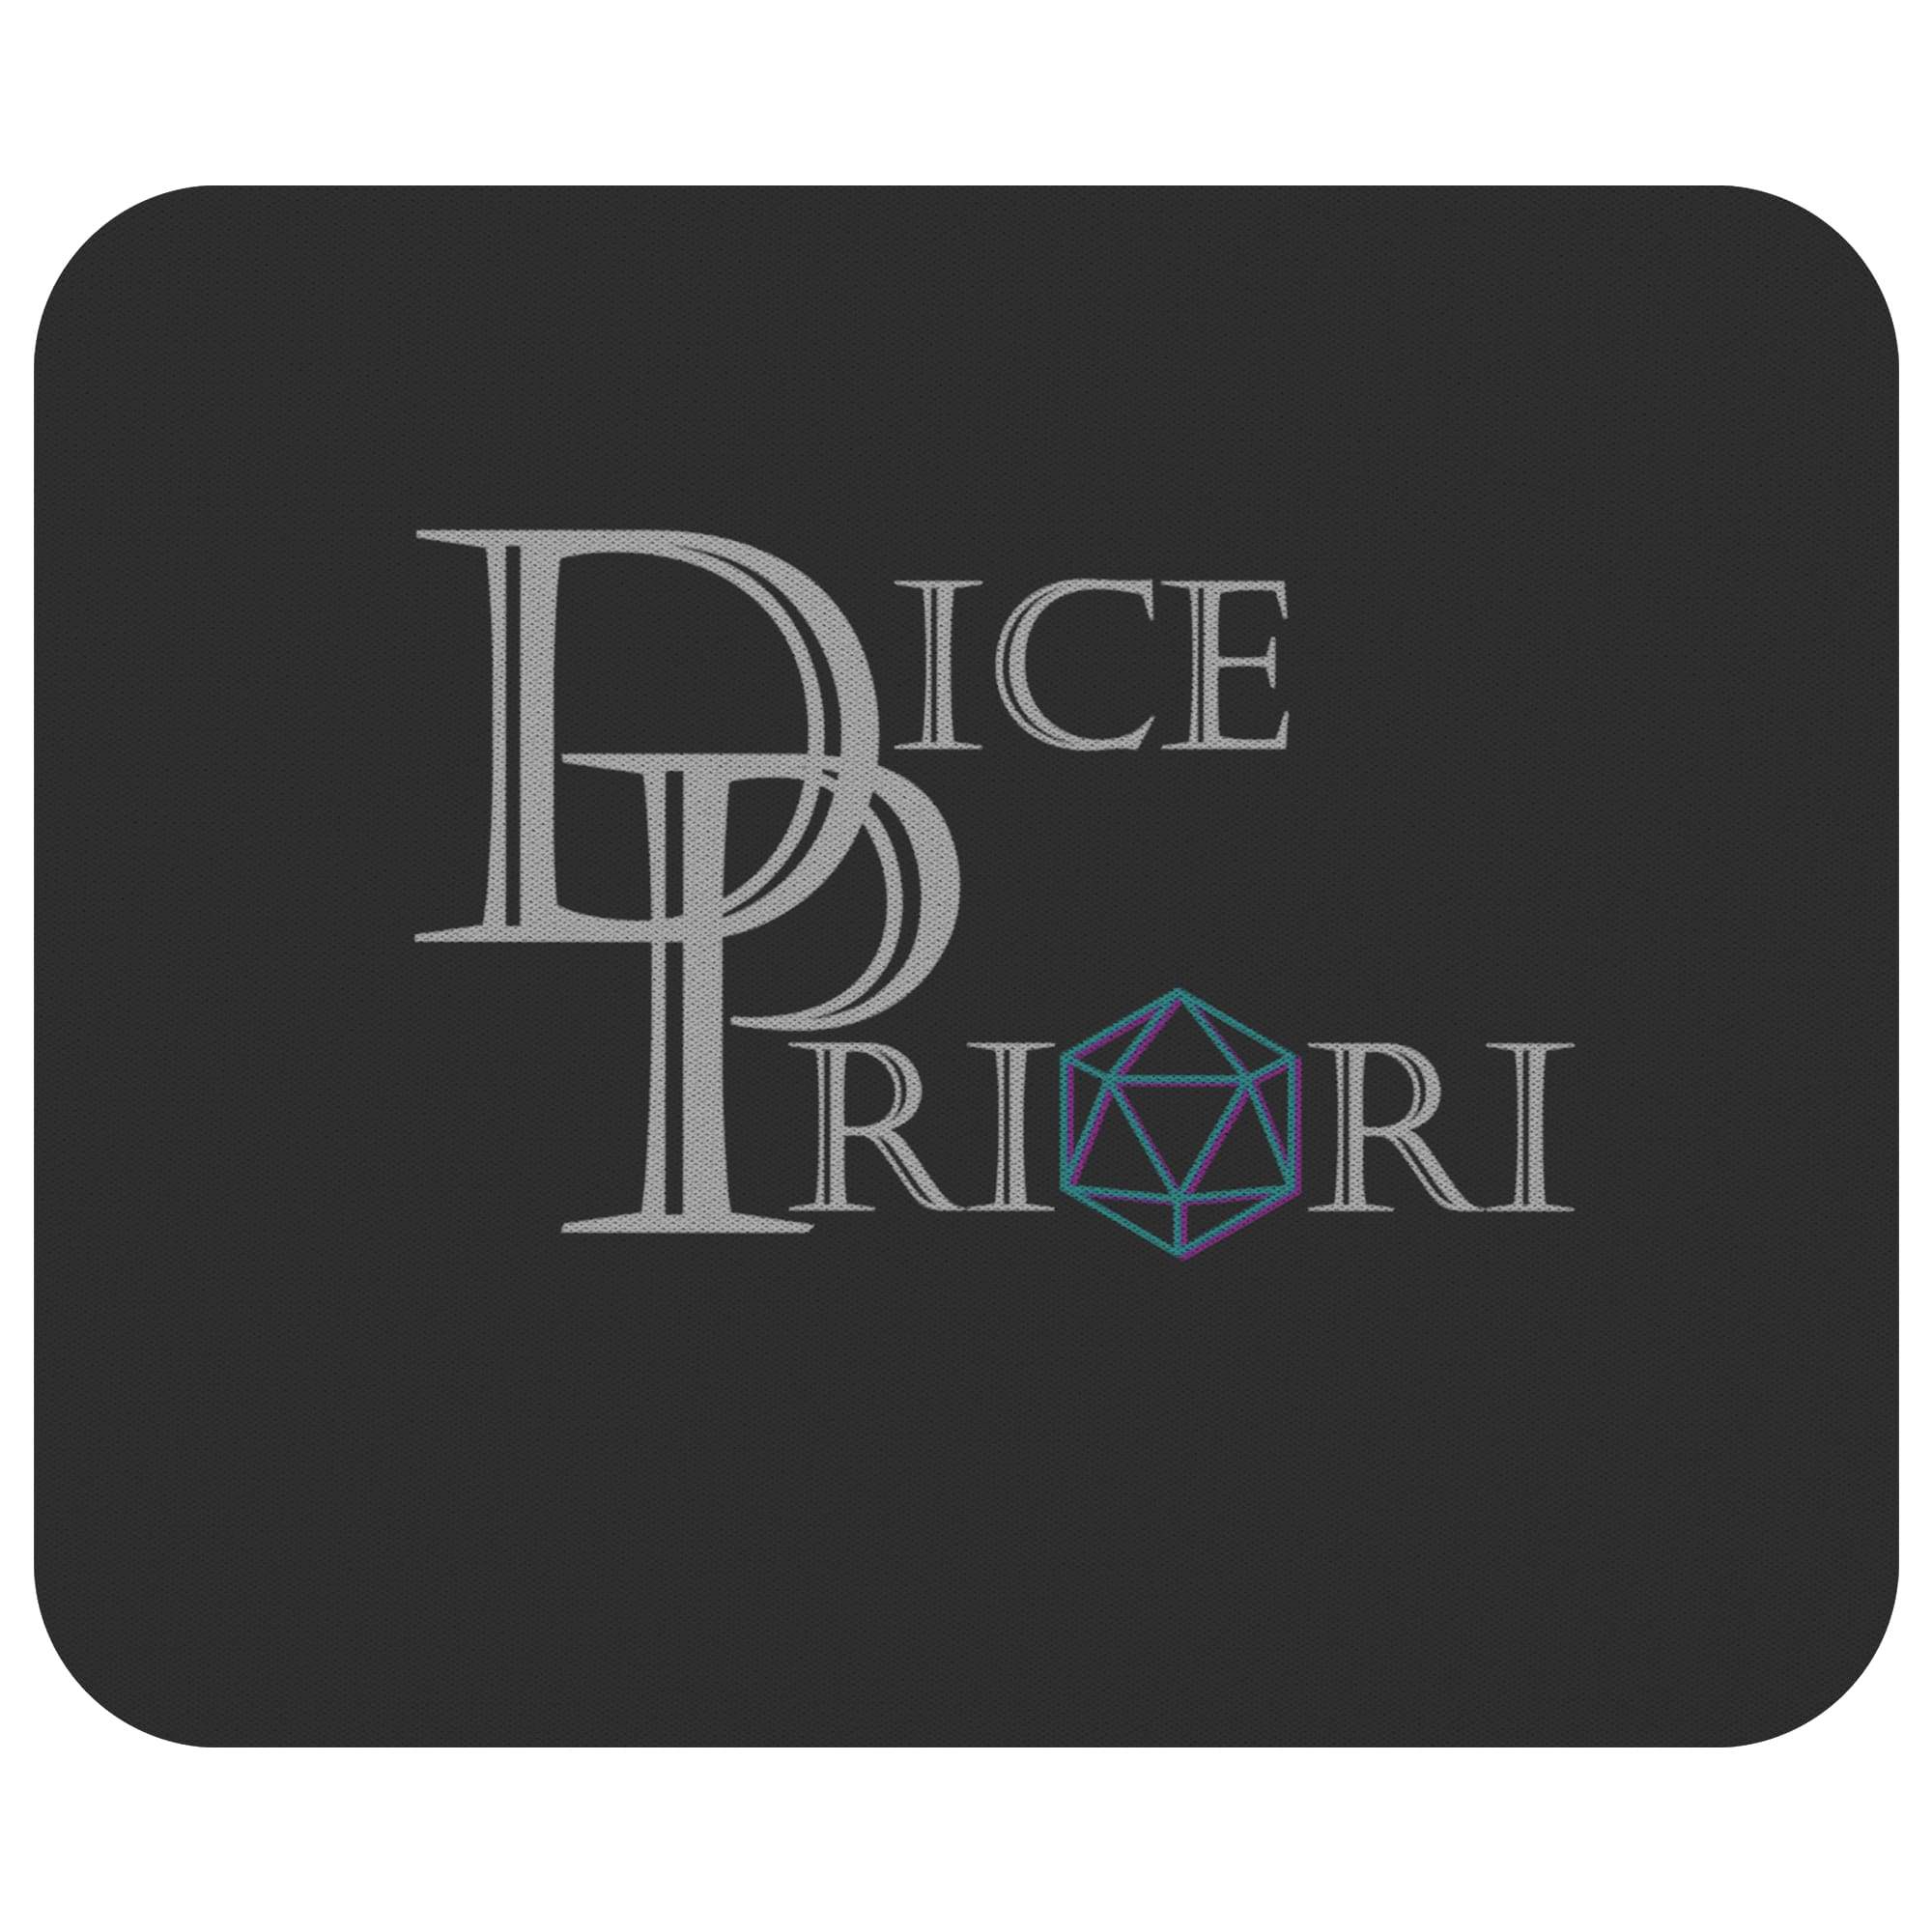 Dice Priori Mousepad (5 Styles) - DP-CTLo-Mou - Mousepads